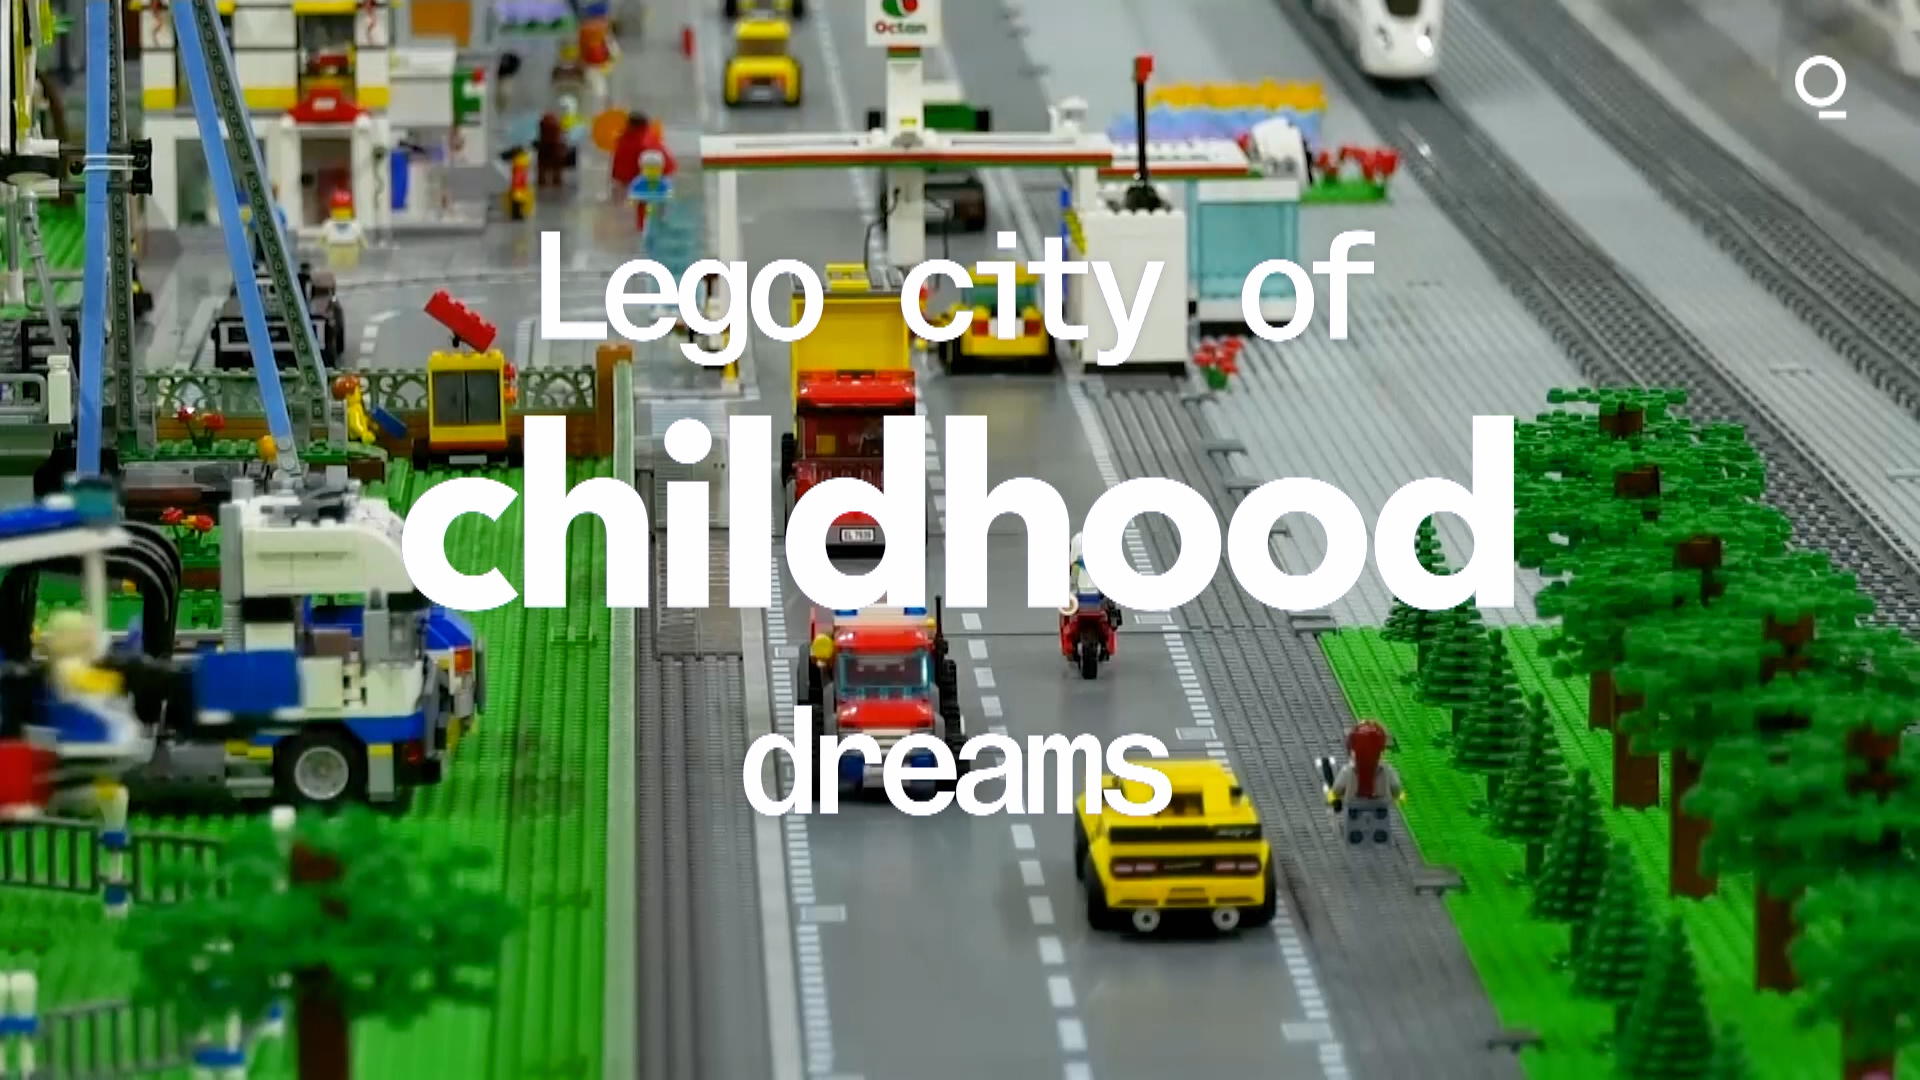 Lego Metropolis of Childhood Dreams